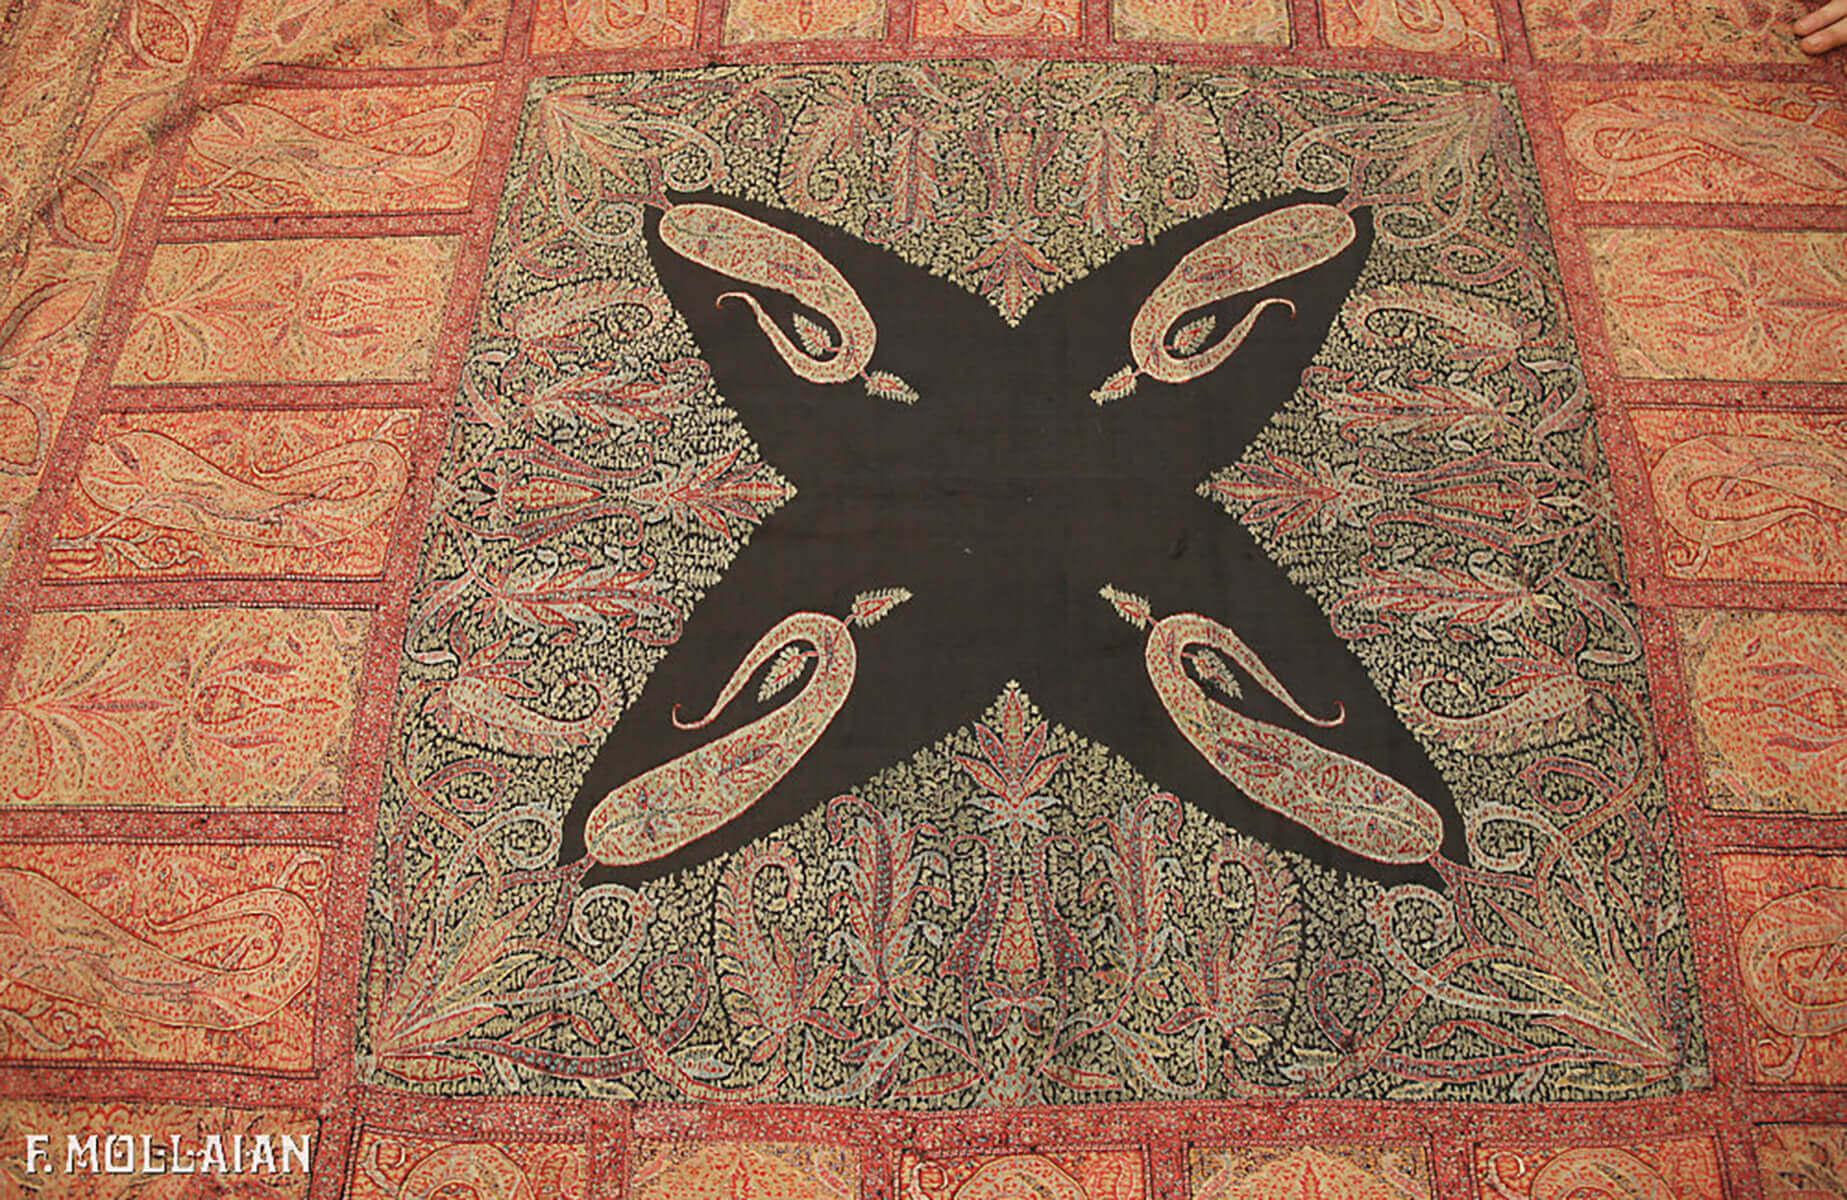 Antique Indian Kashmir Shawl (Textile) n°:13258101